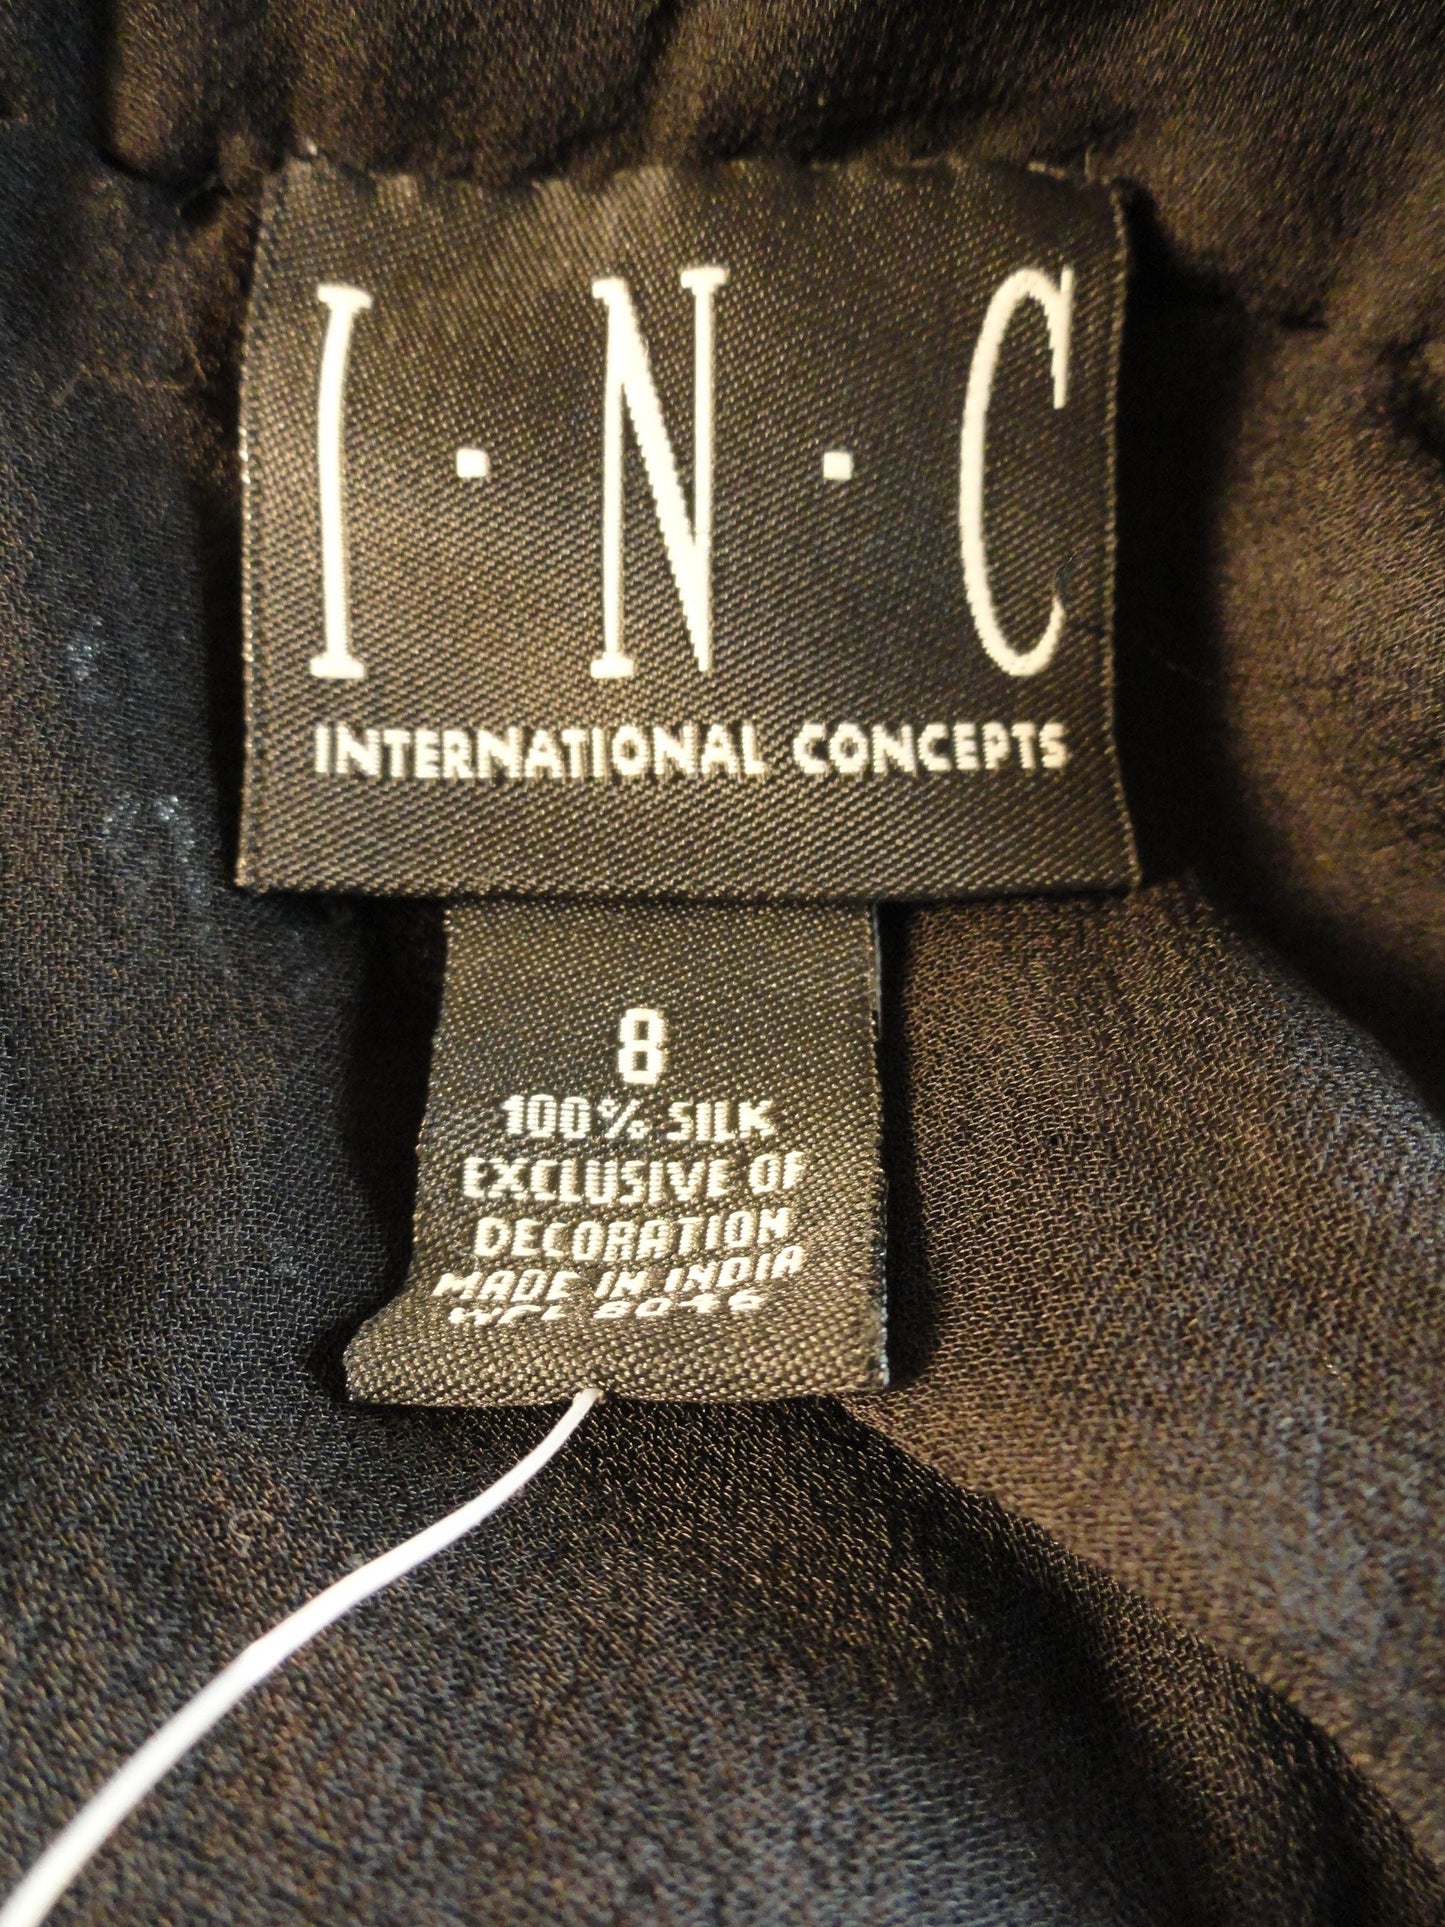 INC Little Black Skirt Beaded Size 8 NWT SKU 000028